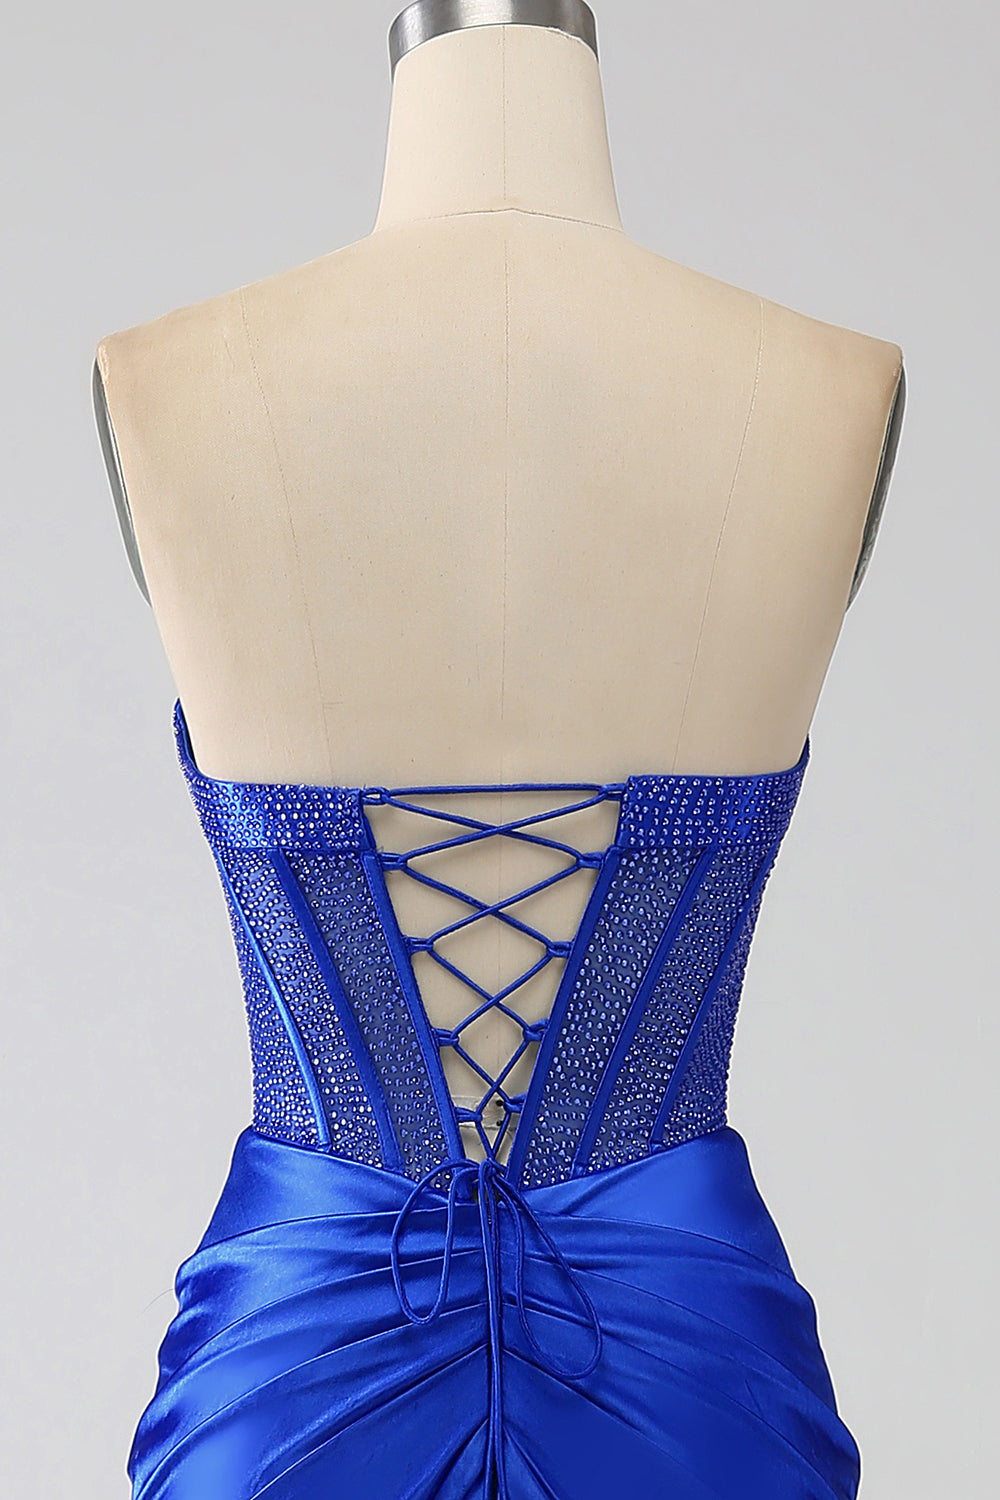 Sirène bustier bleu Royal Corset robe de bal avec perles